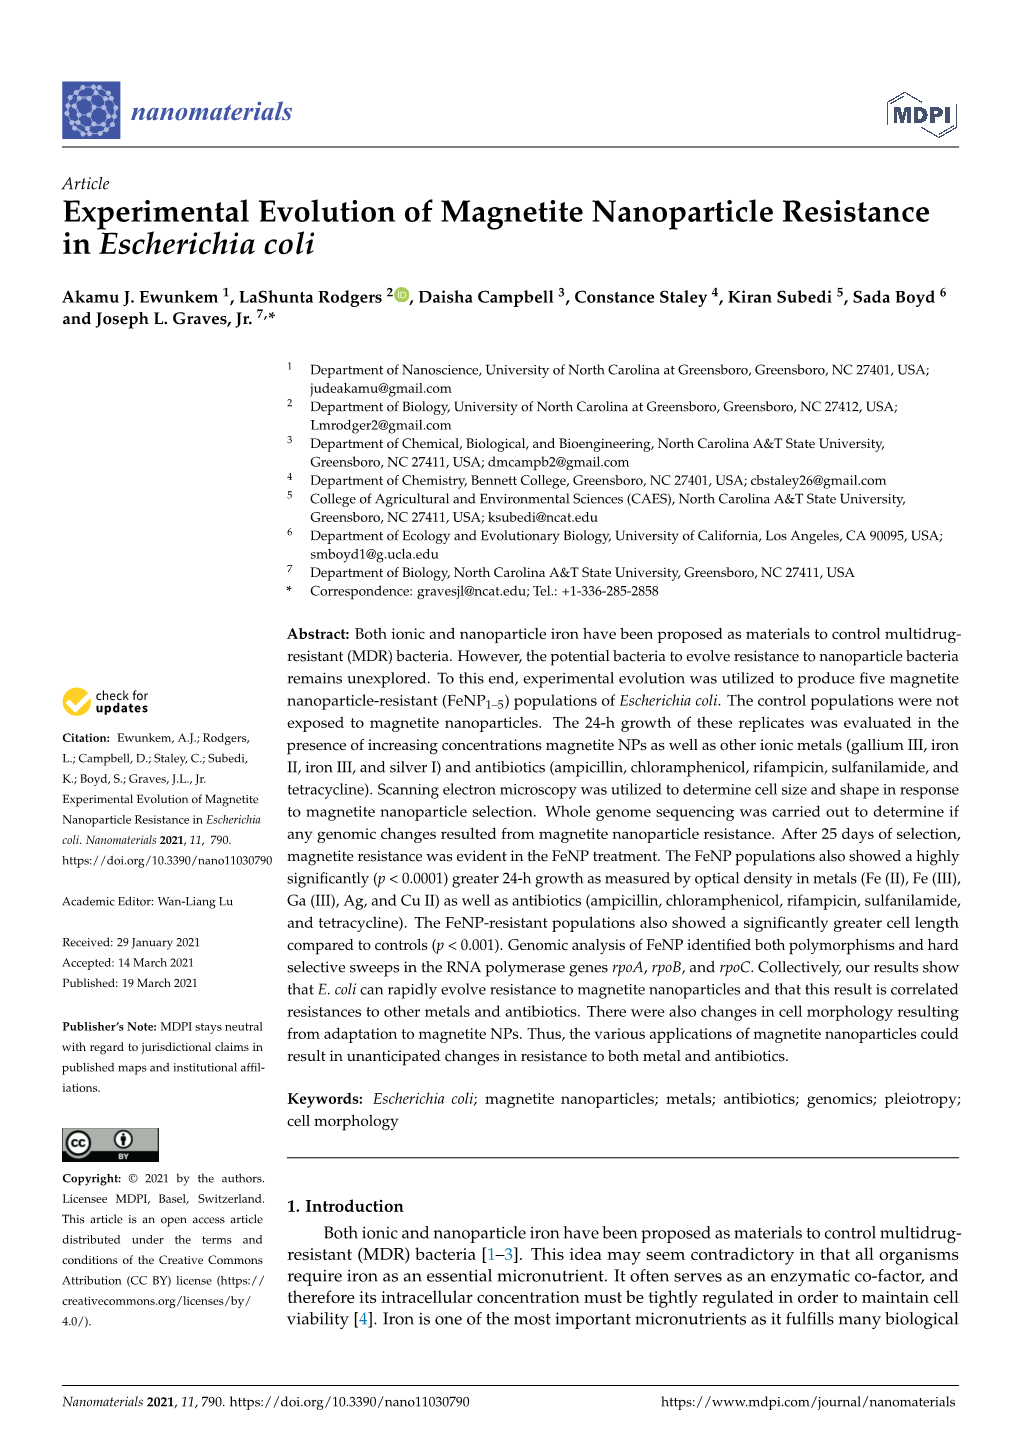 Experimental Evolution of Magnetite Nanoparticle Resistance in Escherichia Coli